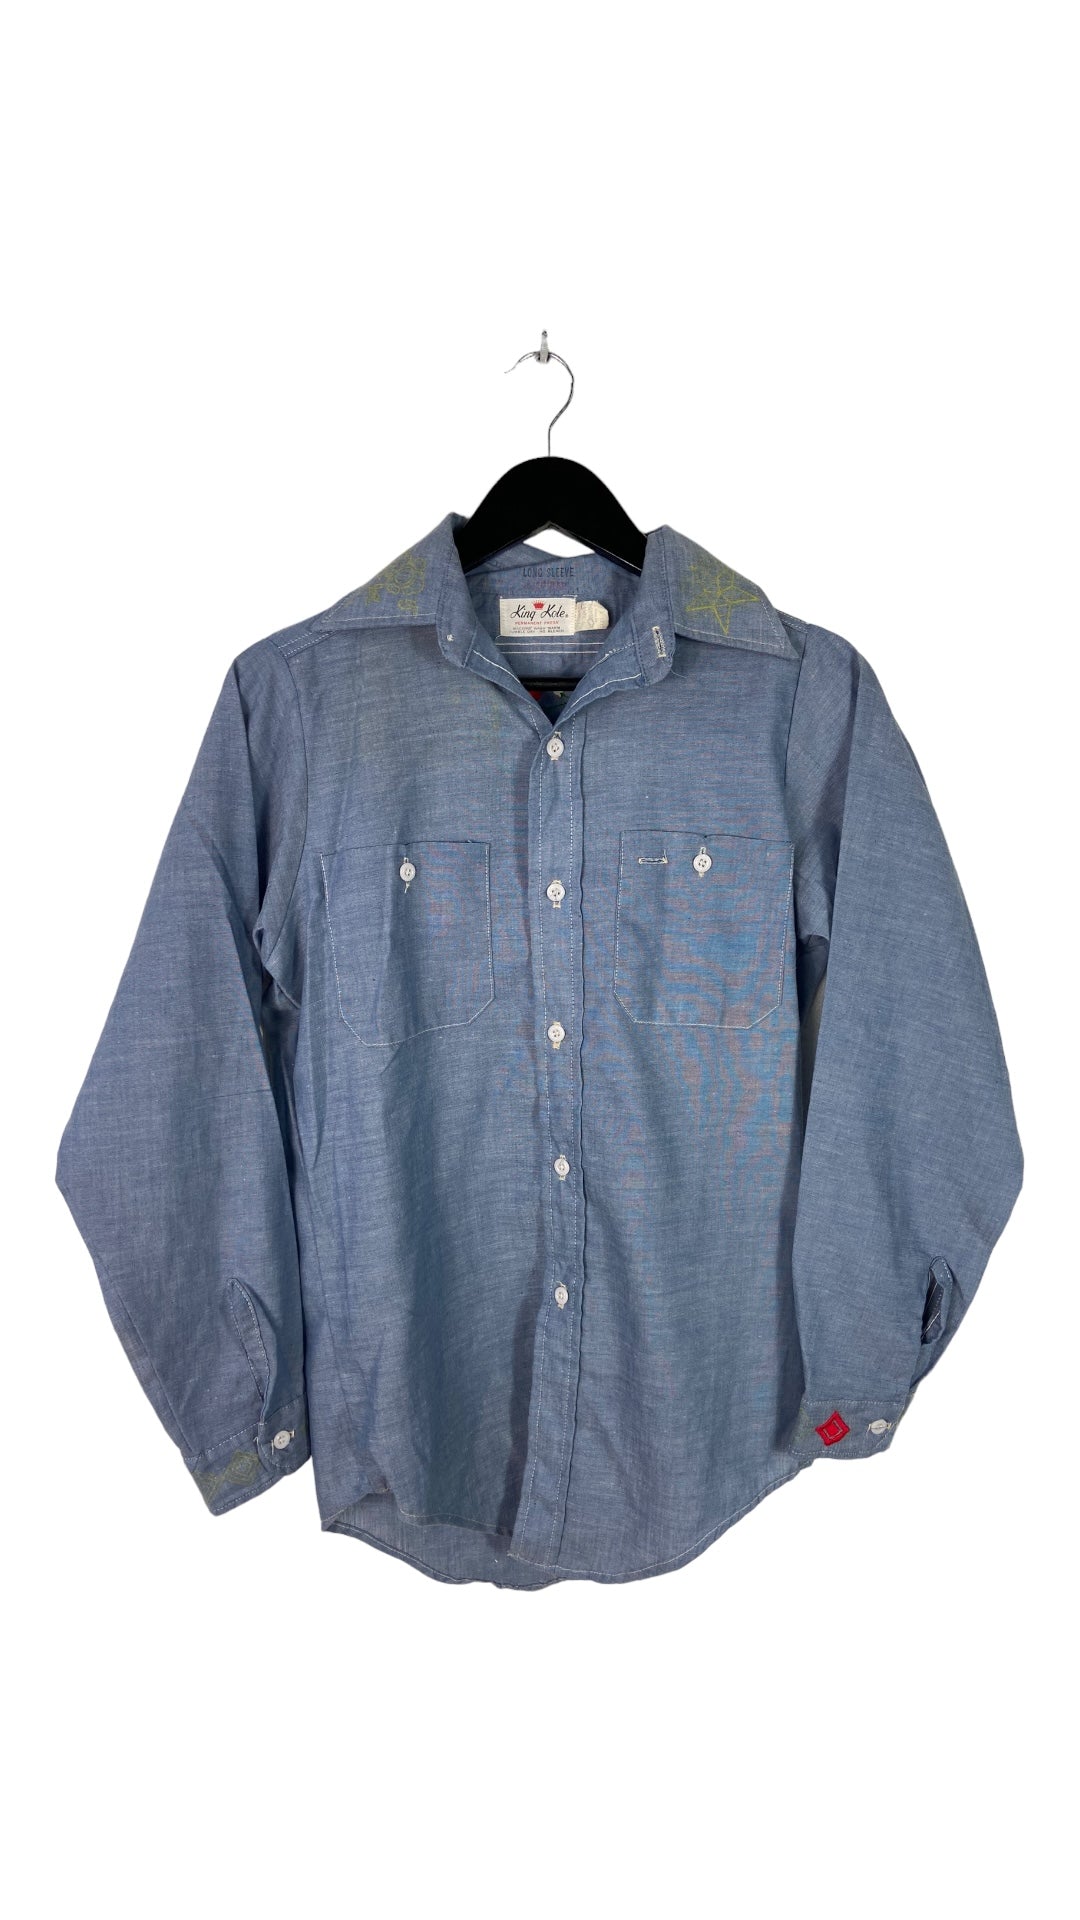 VTG Flower Embroidered Blue Button Up Shirt Sz M